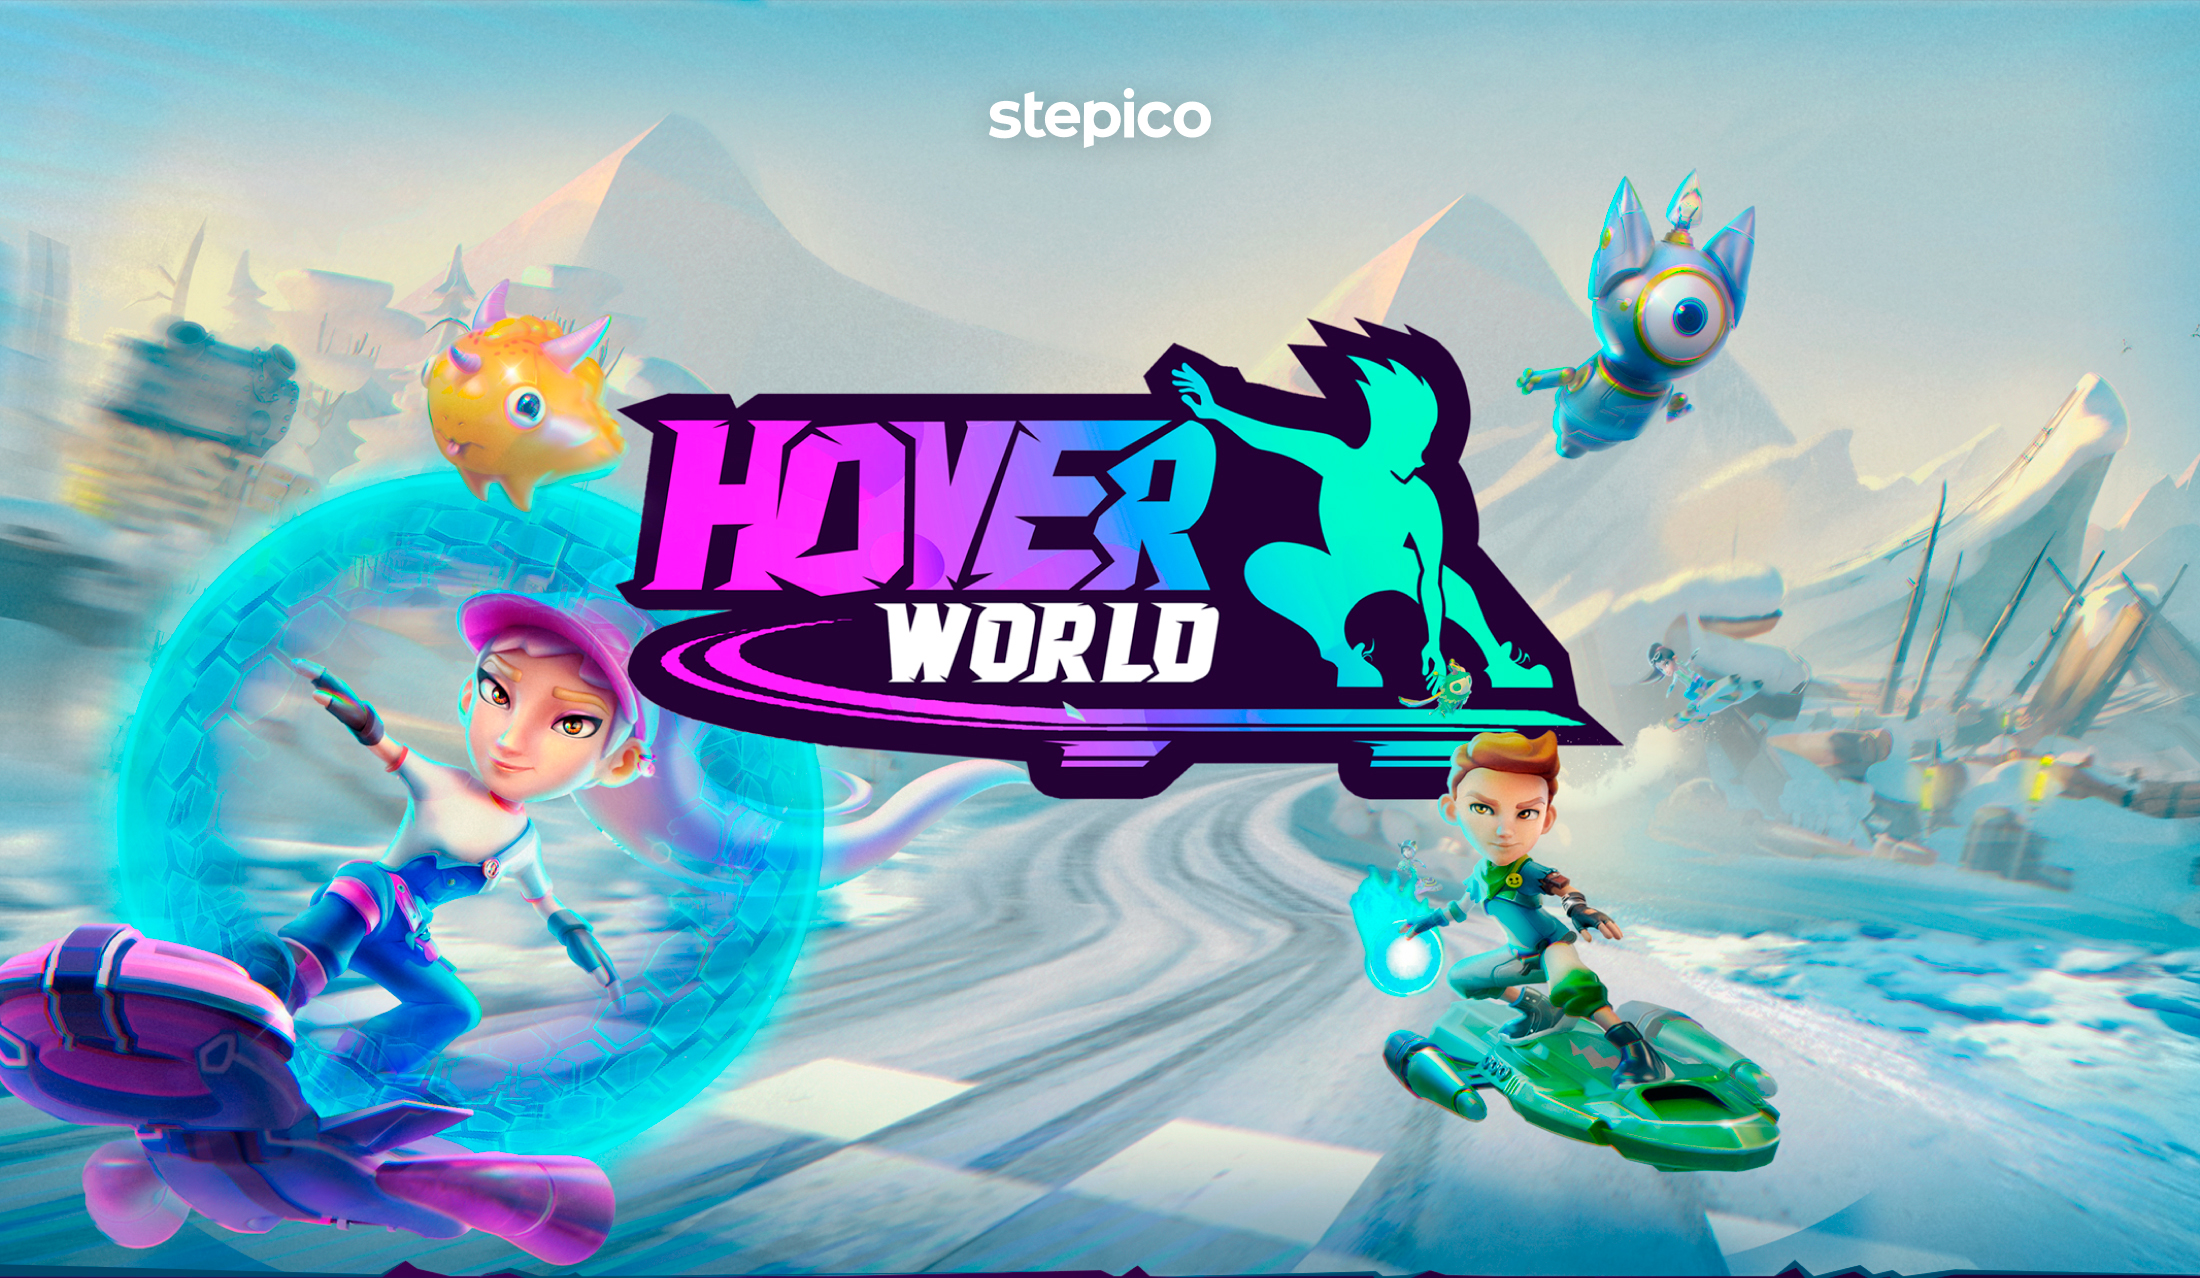 HoverWorld Stepico Website 1